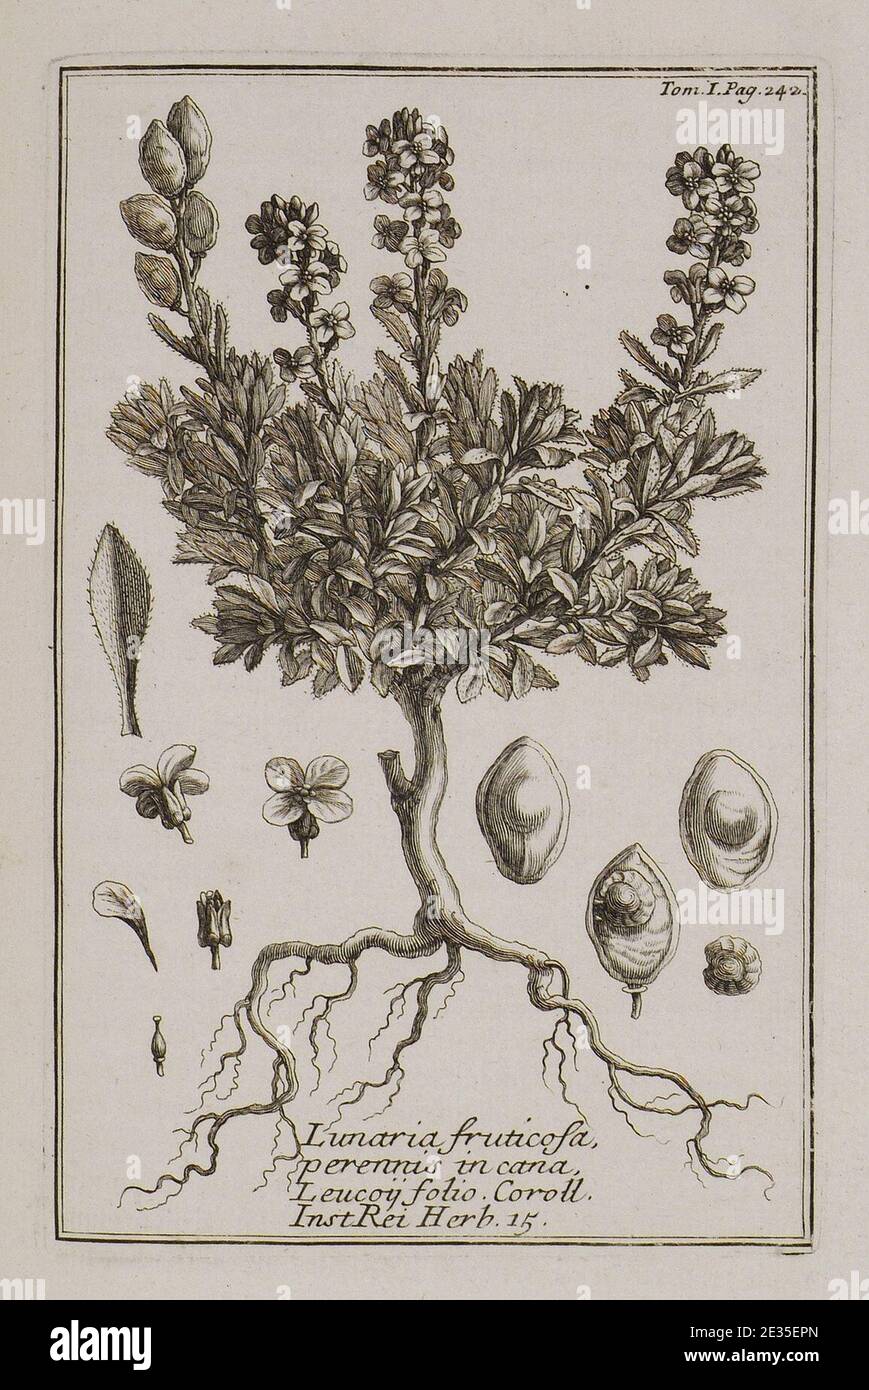 Lunaria fruticosa, perennis, incana, Leucoii folio Coroll Inst Rei herb 15 - Tournefort Joseph Pitton De - 1717. Stock Photo